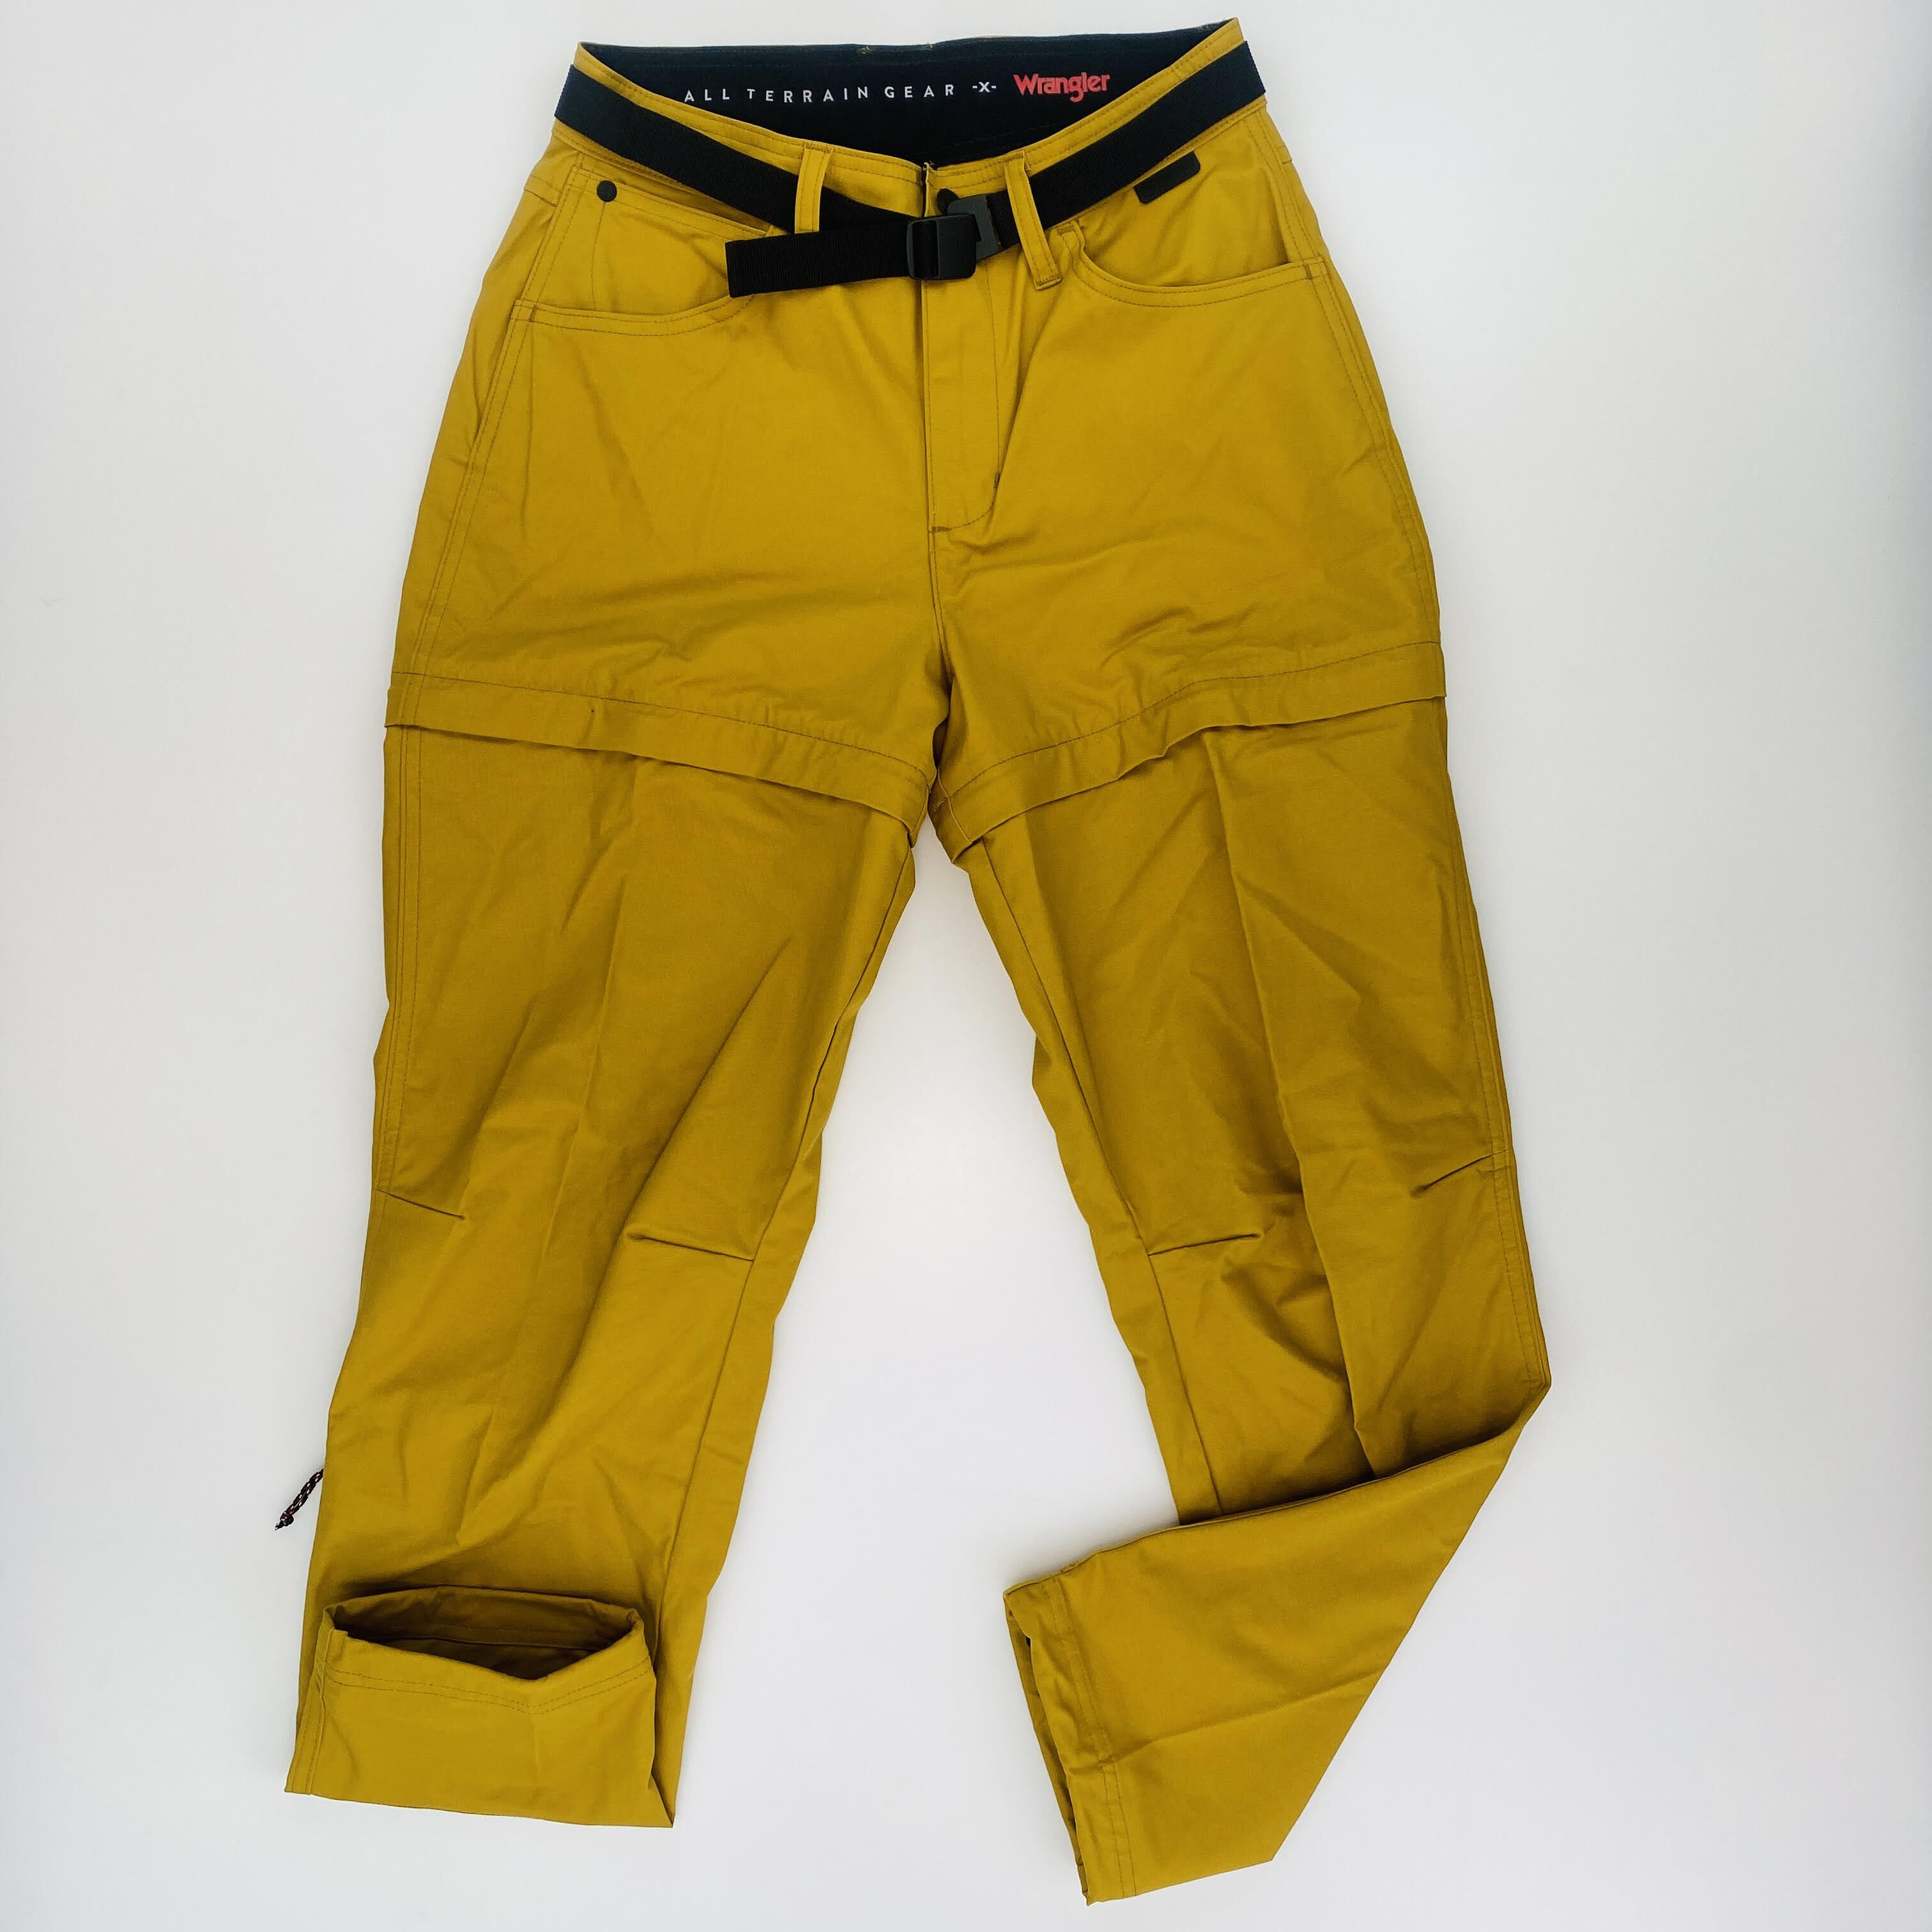 Wrangler Packable Zipoff Pant - Pantaloni da escursionismo di seconda mano - Donna - Giallo - US 28 | Hardloop